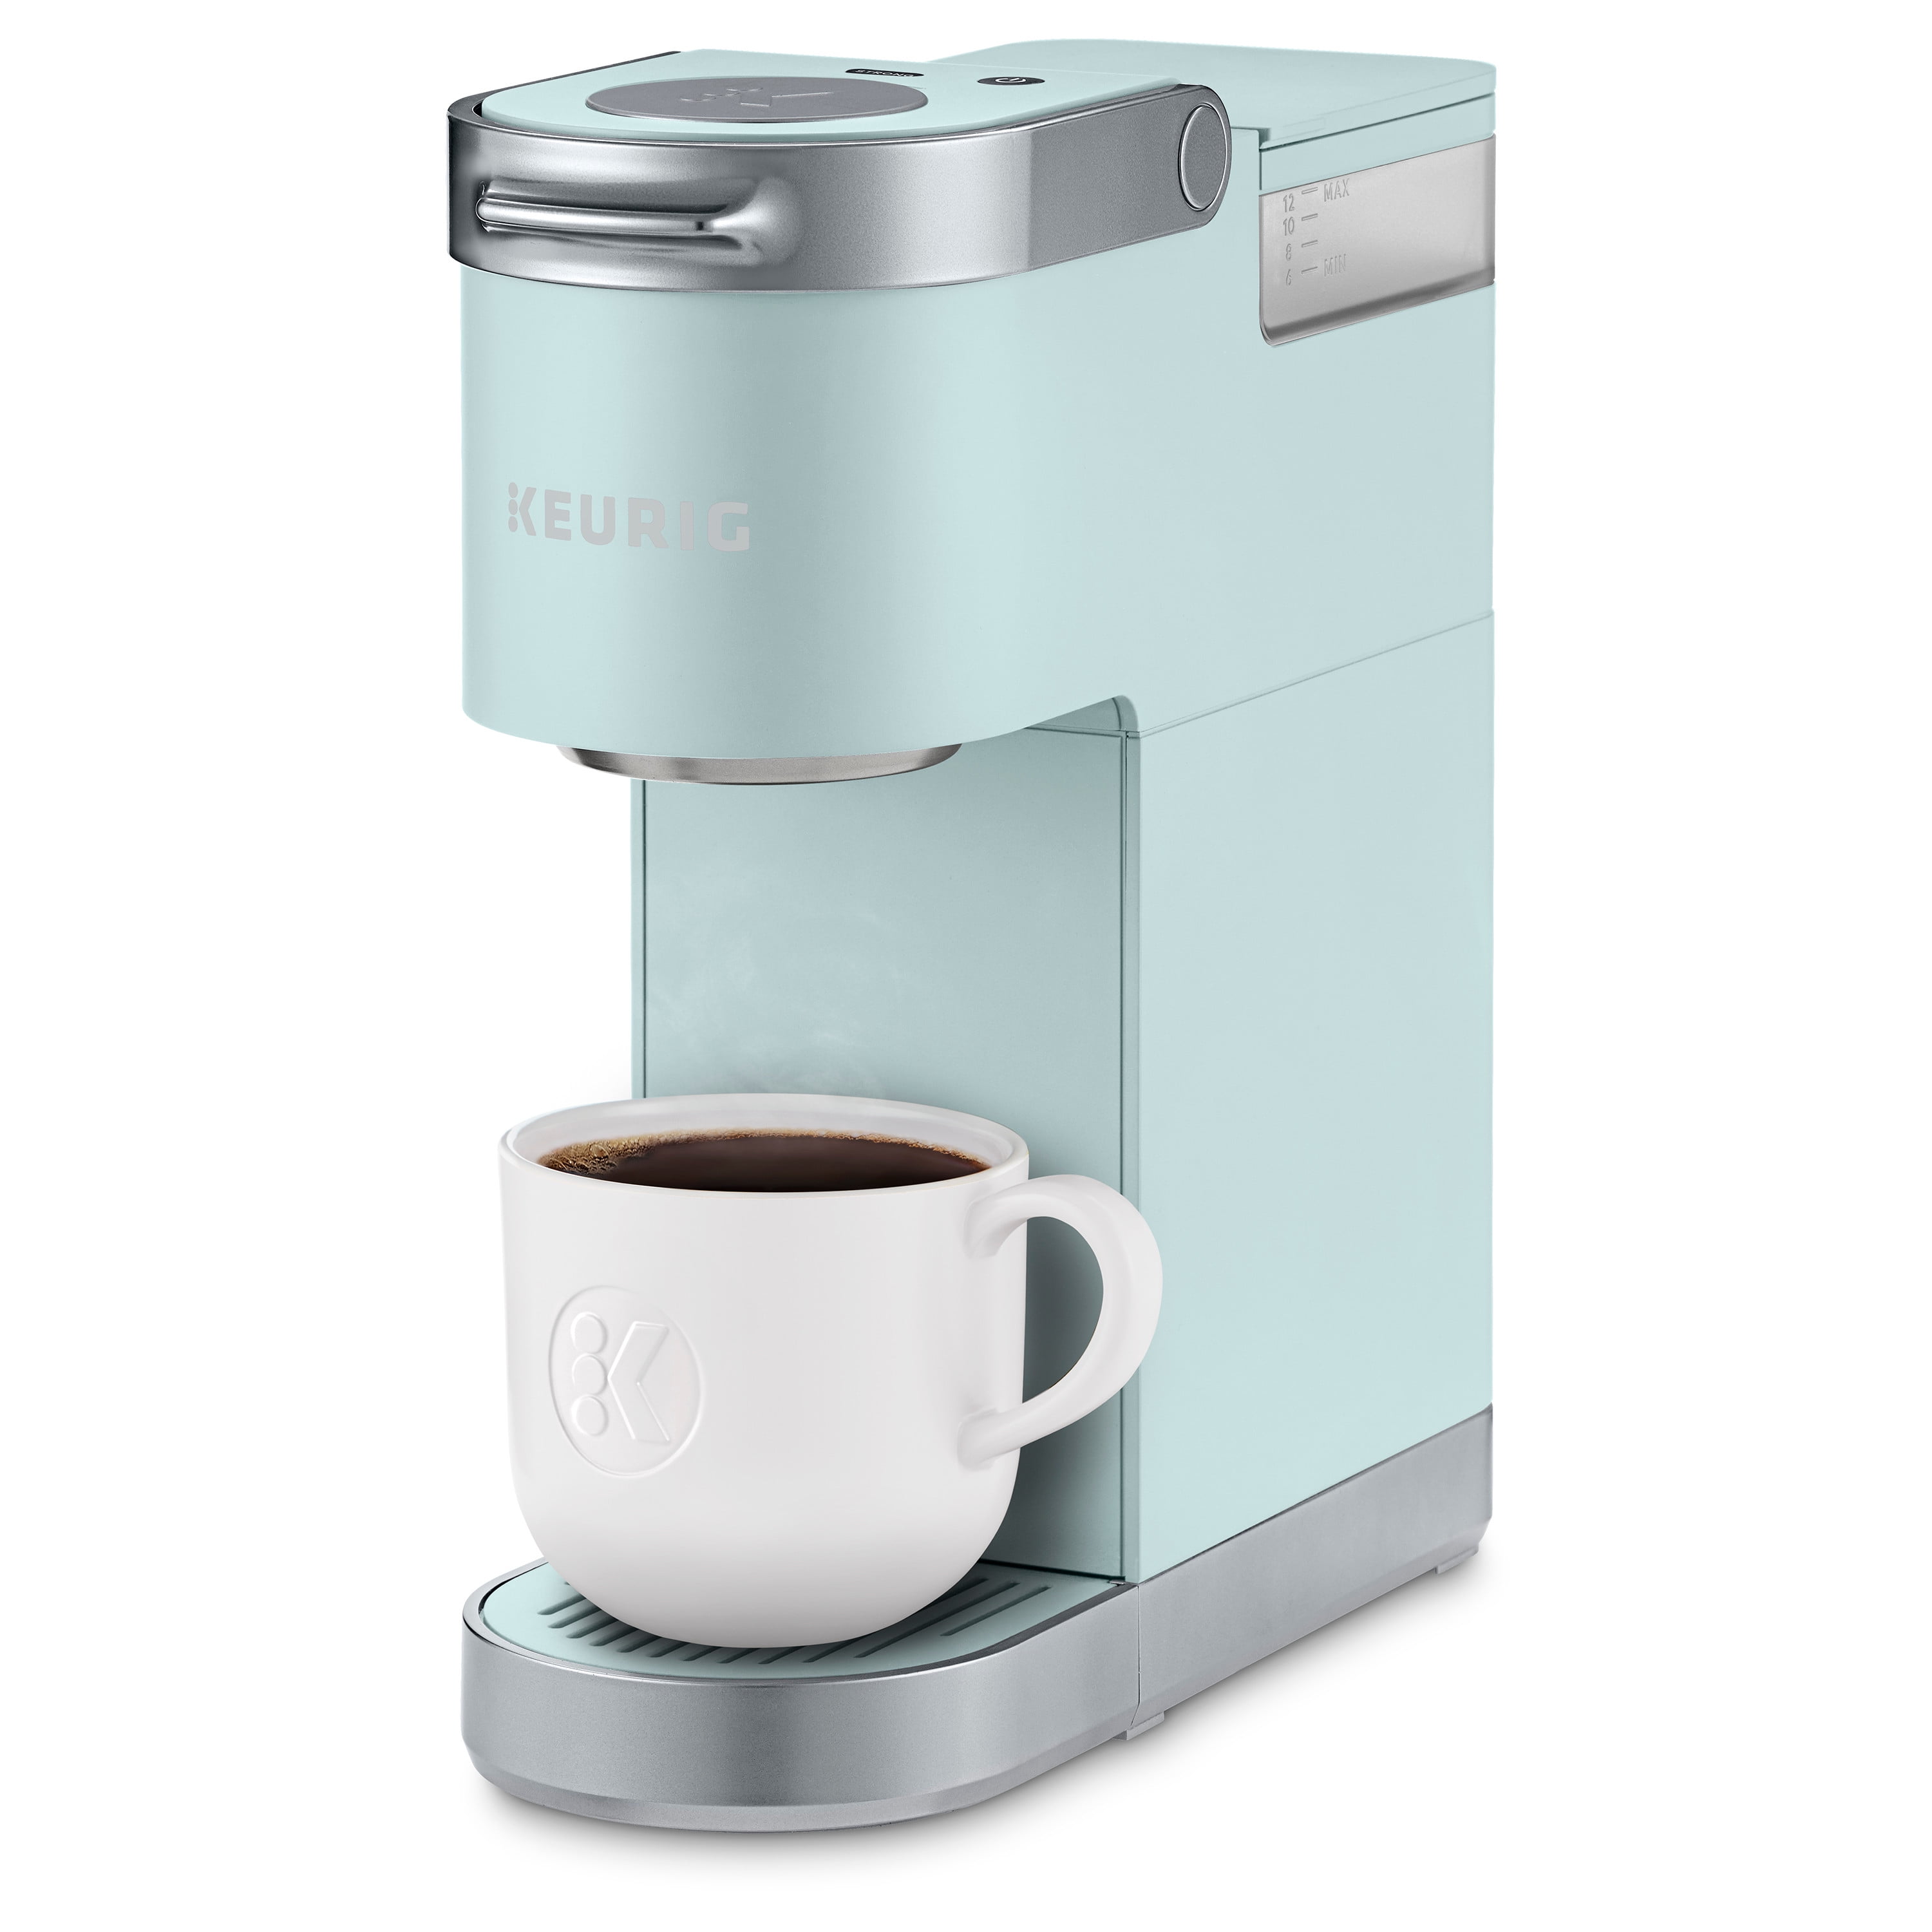 Keurig K-Mini Plus Coffee Maker with Voucher - 21432901